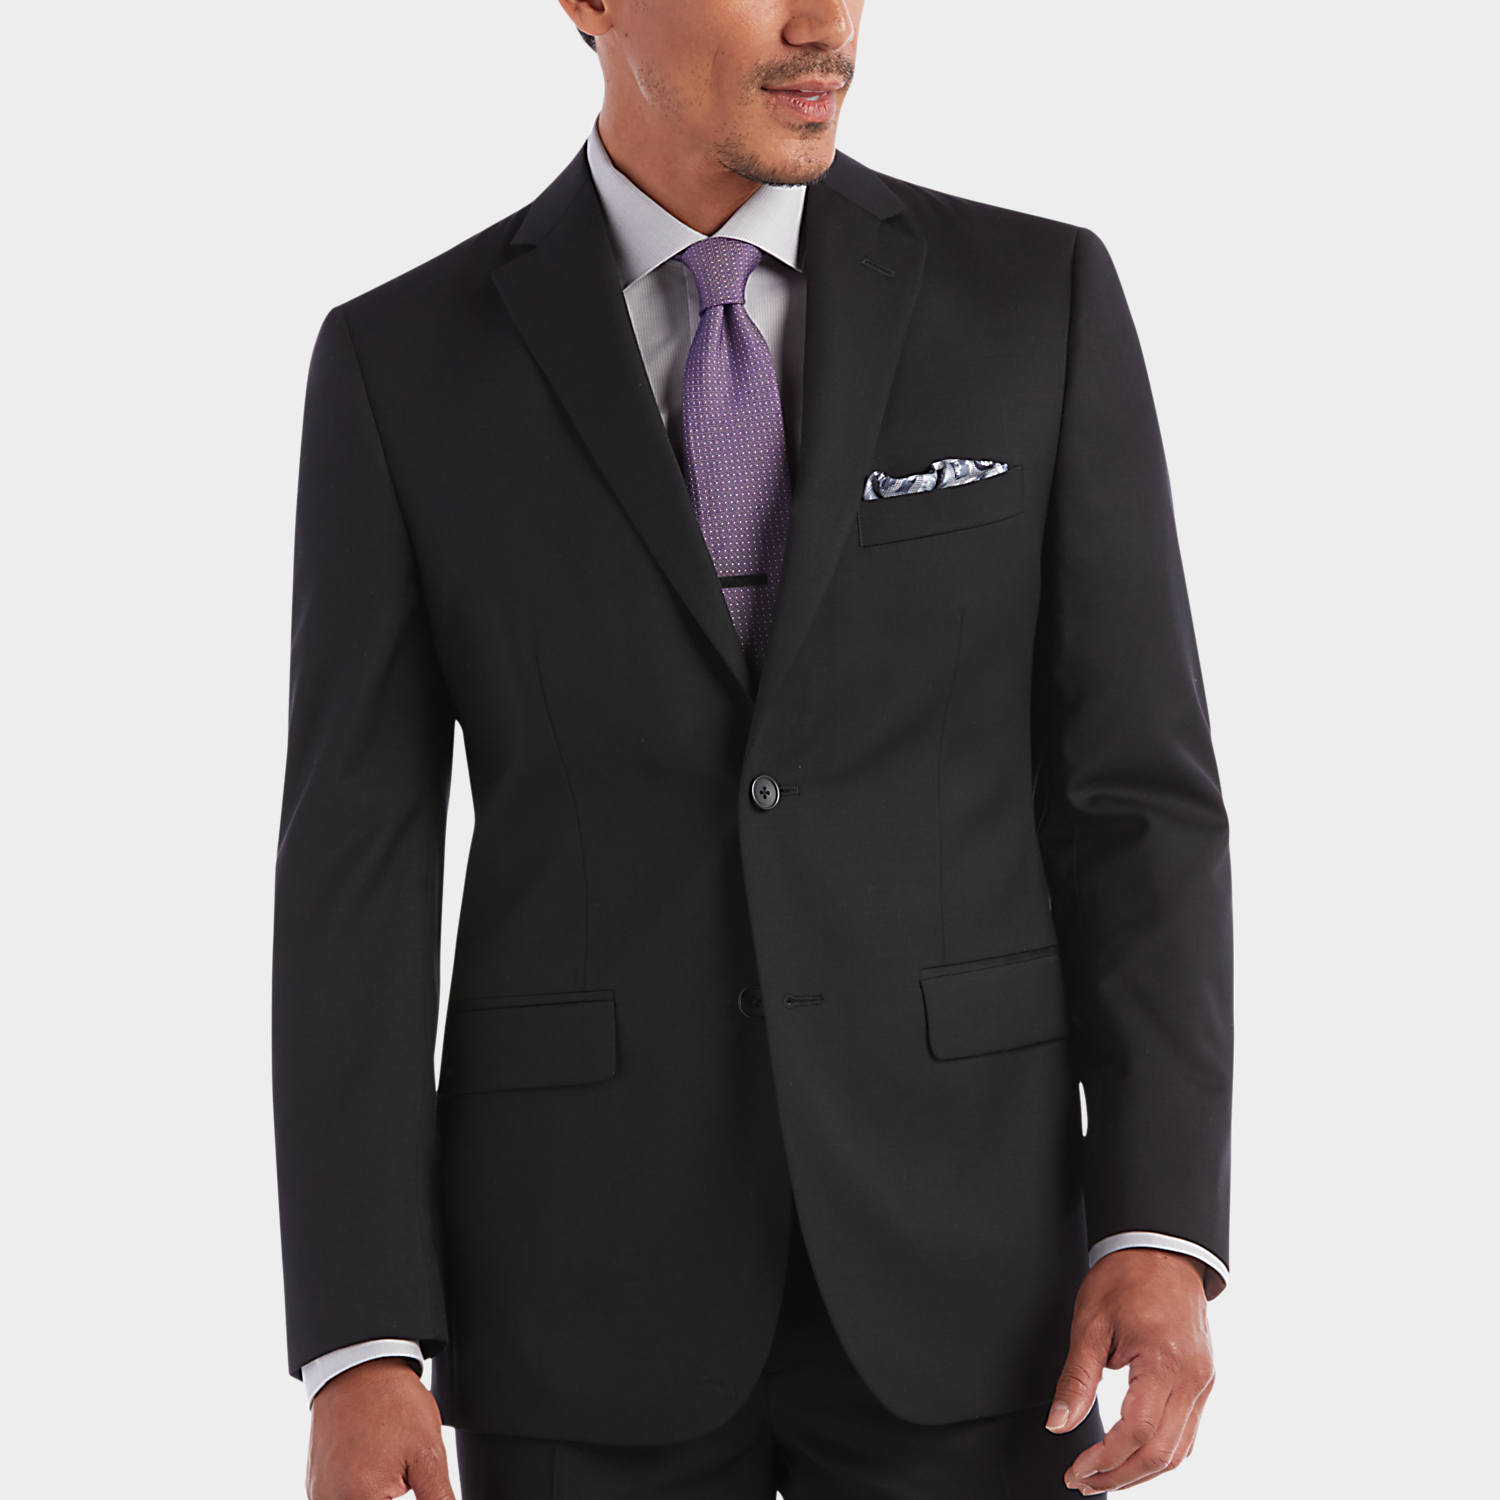 black suits 100% wool black slim fit suit - menu0027s suits - awearness kenneth cole | FYNIETF